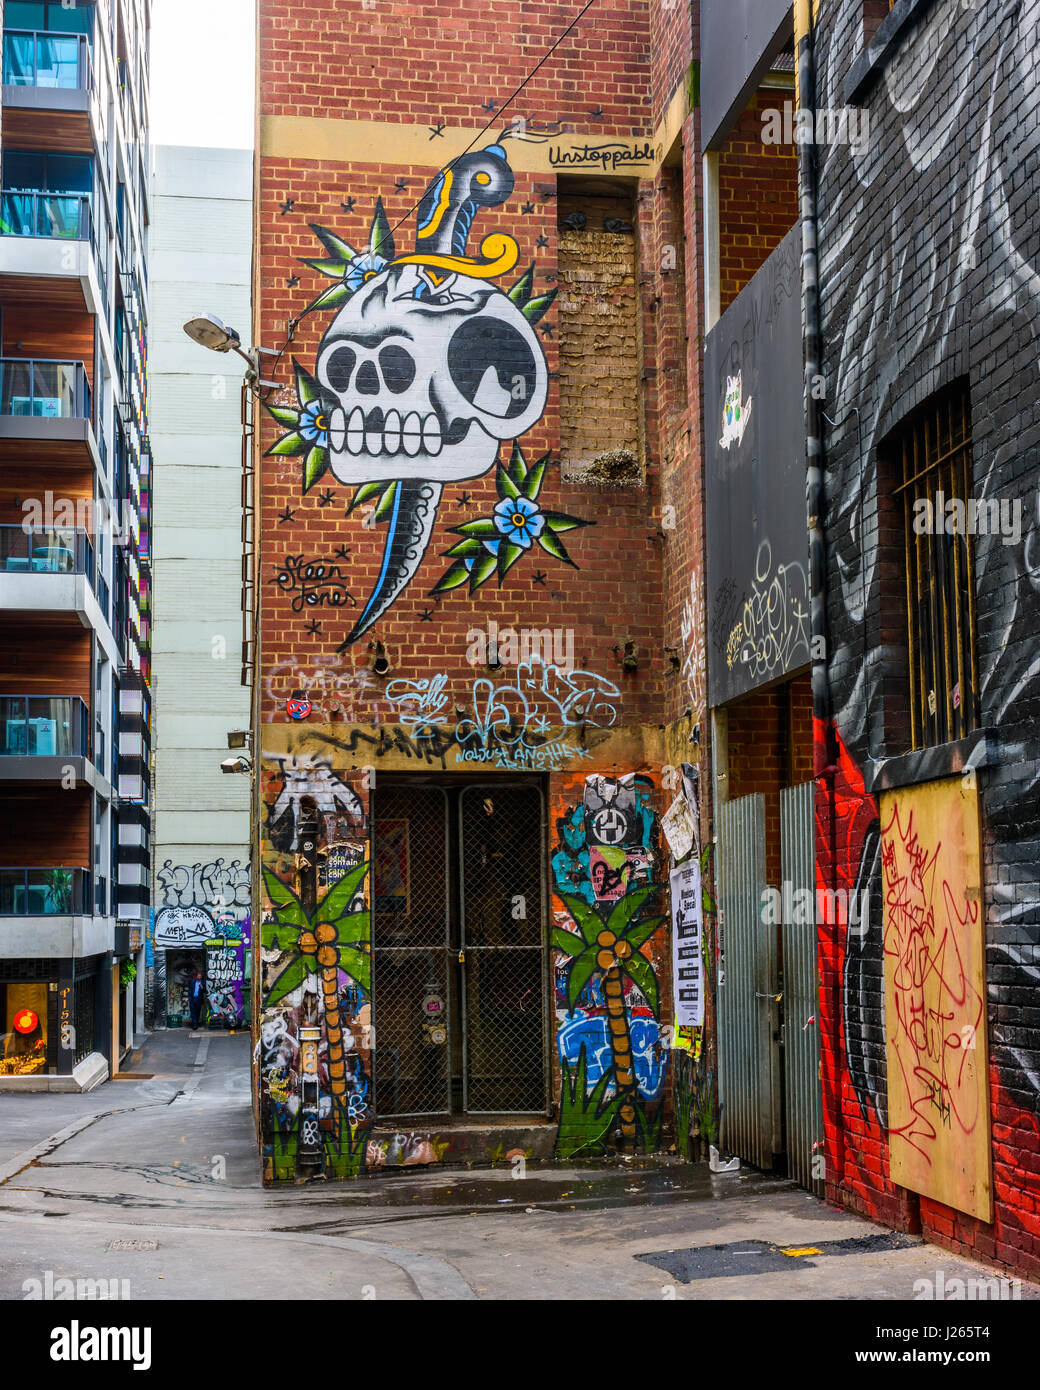 Melbourne Street Art J265T4 